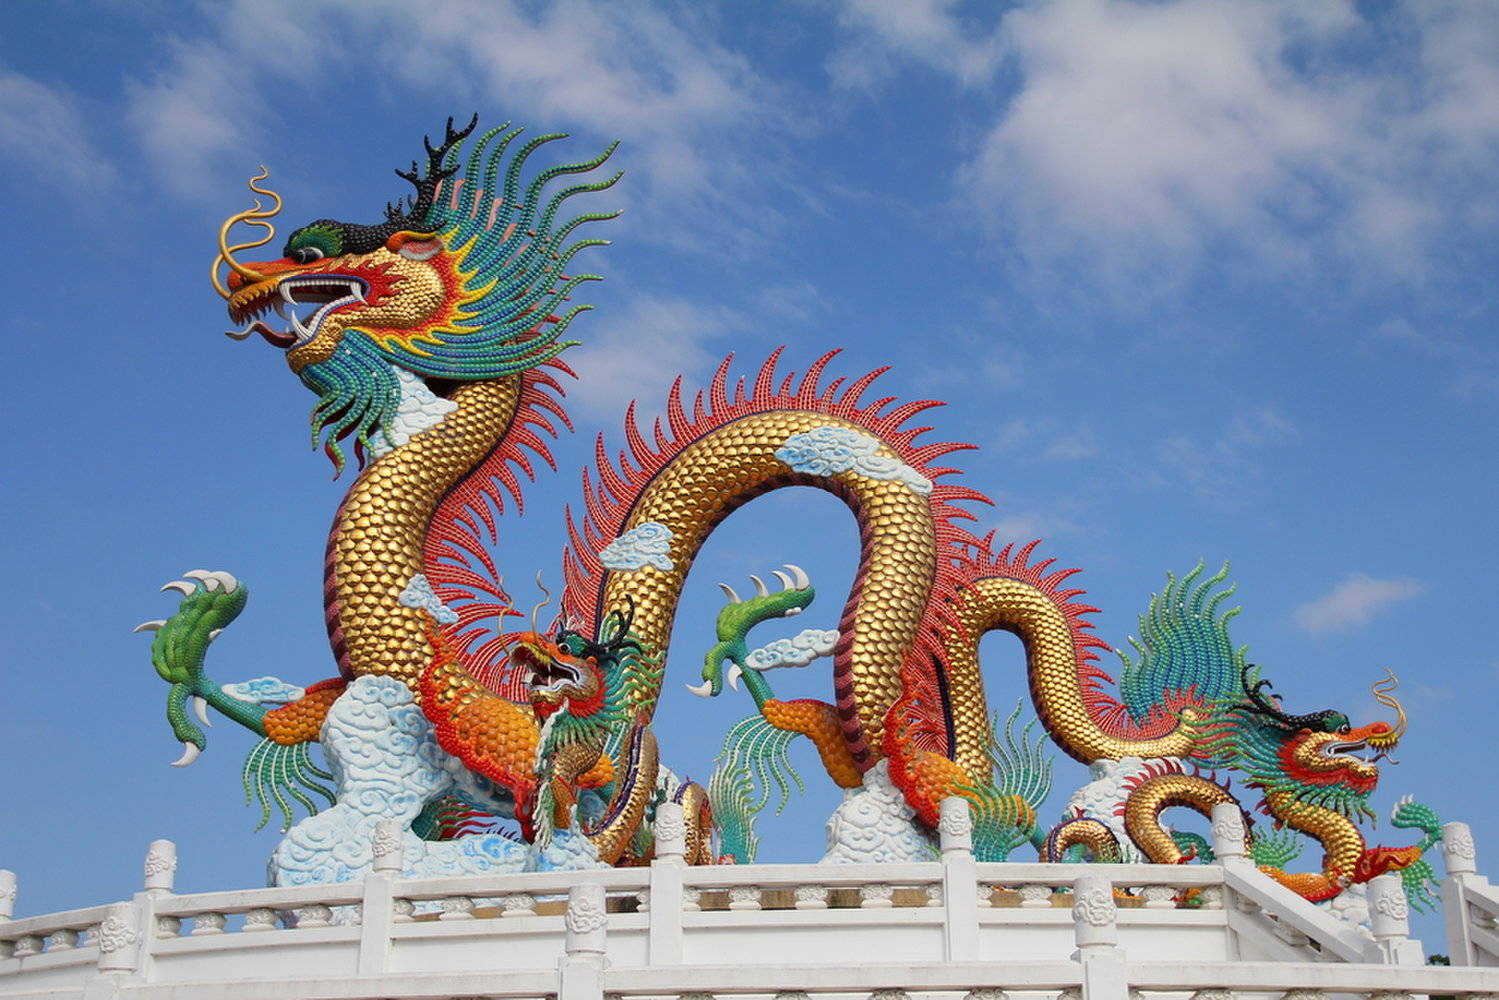 Asia dragon. Фуцанлун дракон. Китай дракон. Лун-Ван дракон Китай. Дилун китайский дракон.